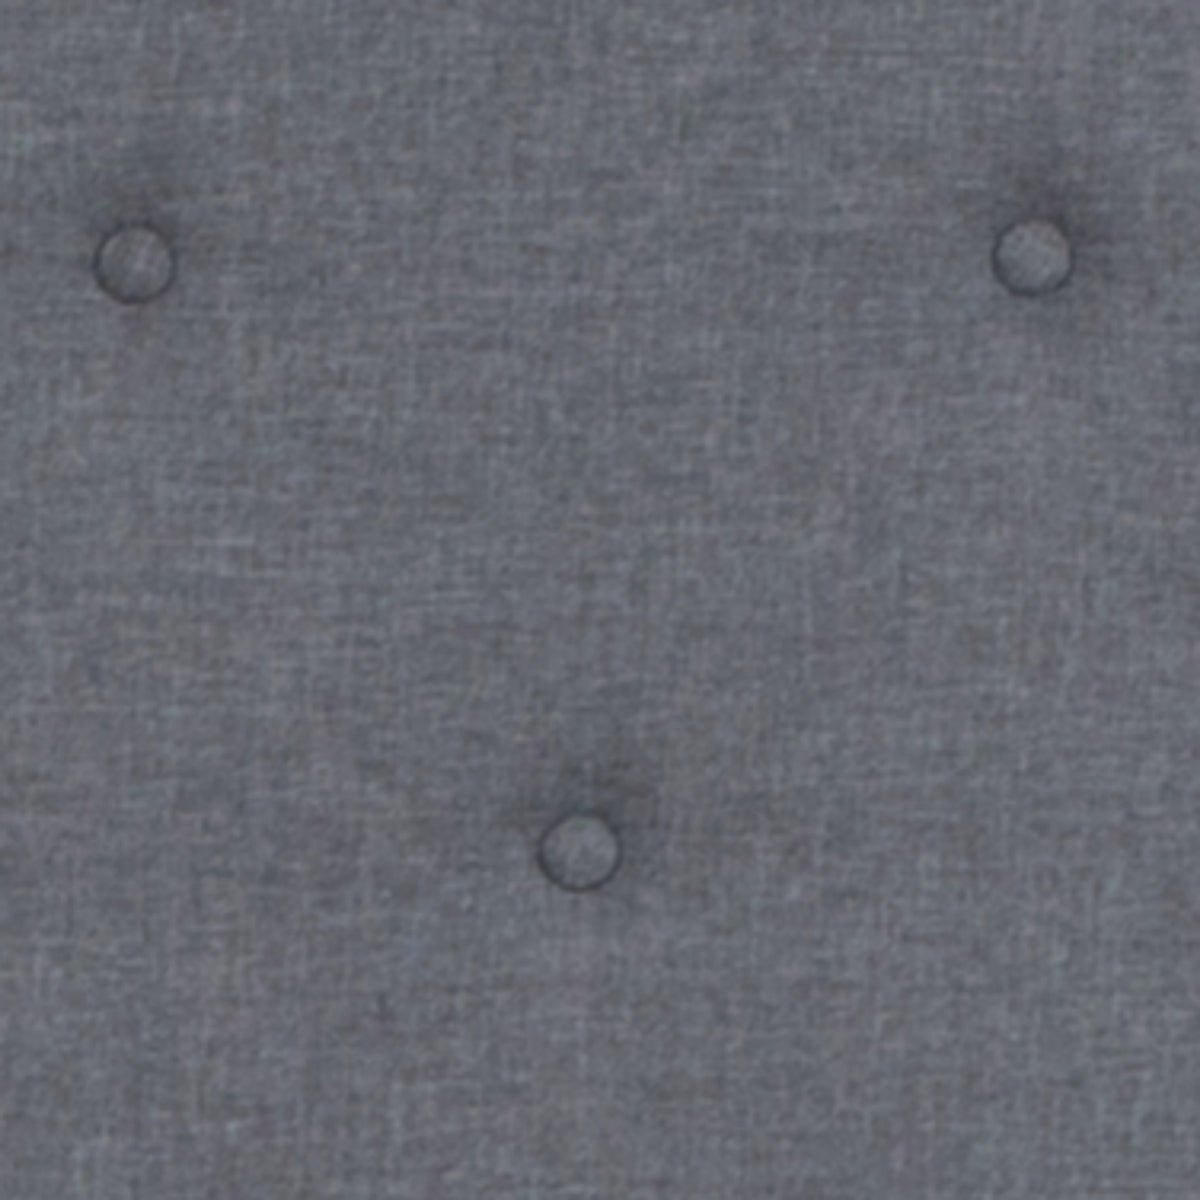 Light Gray,Full |#| Full Size Panel Tufted Light Gray Fabric Platform Bed with Memory Foam Mattress